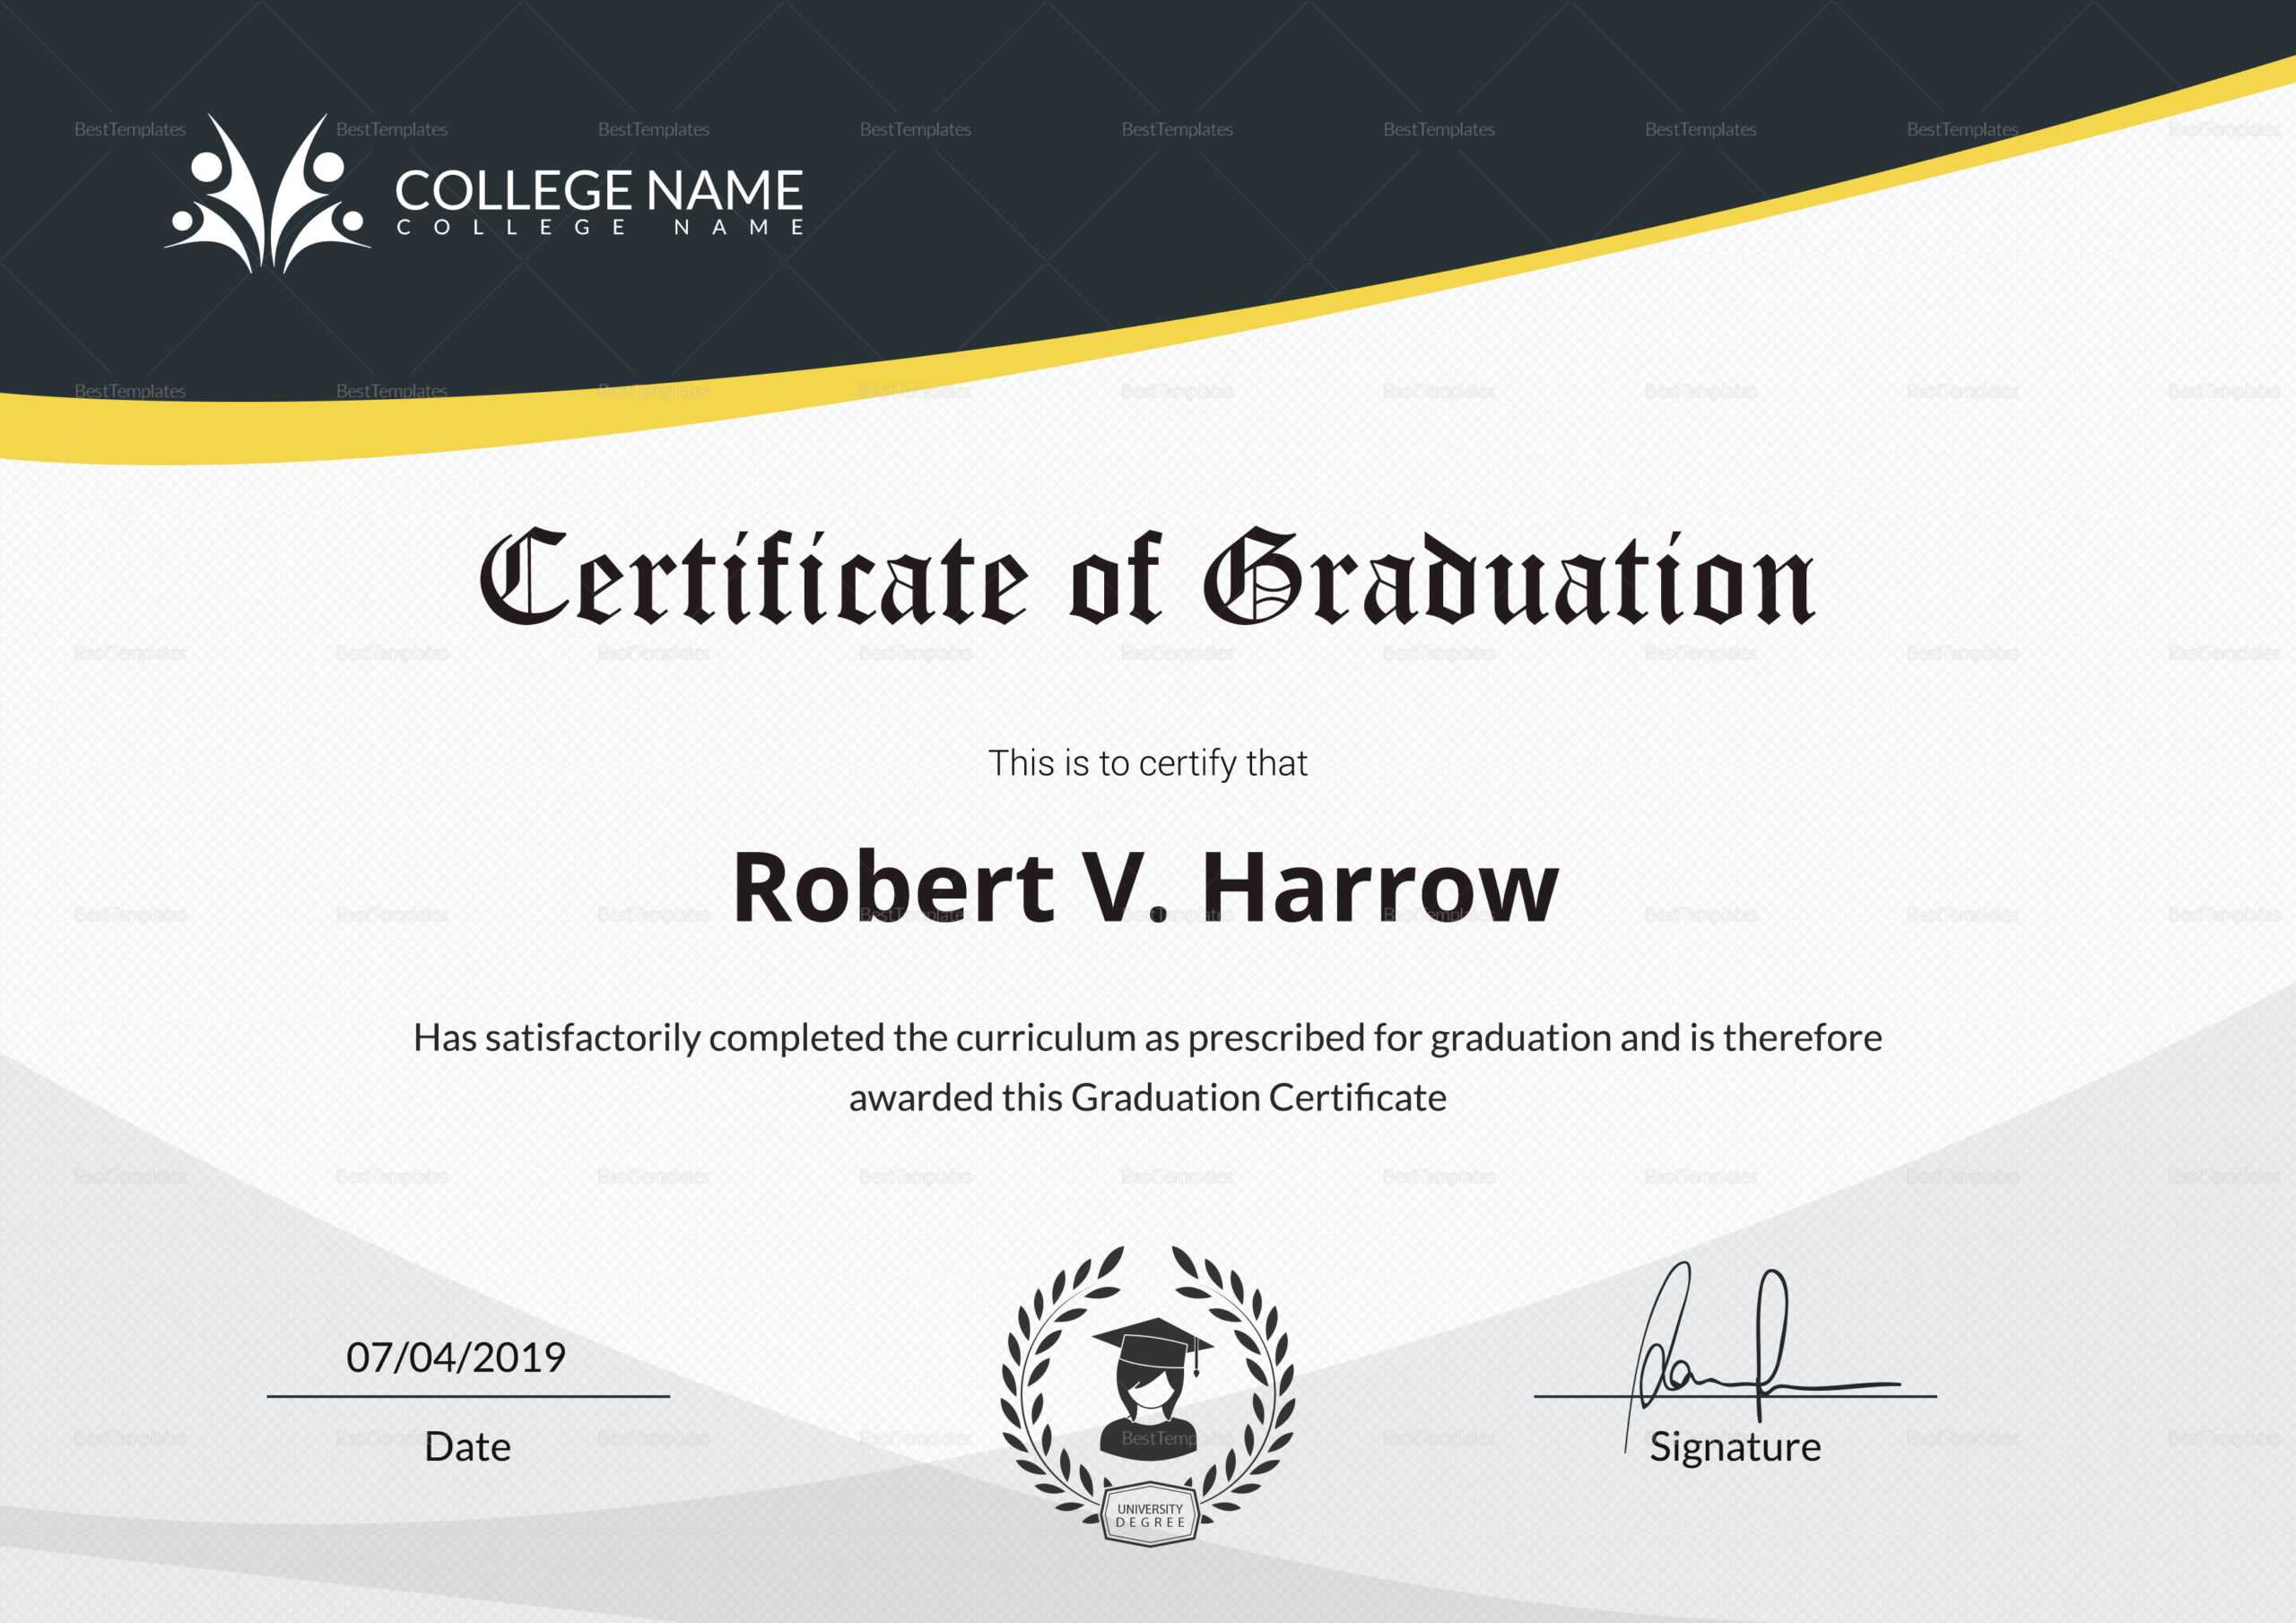 Universal College Graduation Certificate Template With Regard To College Graduation Certificate Template